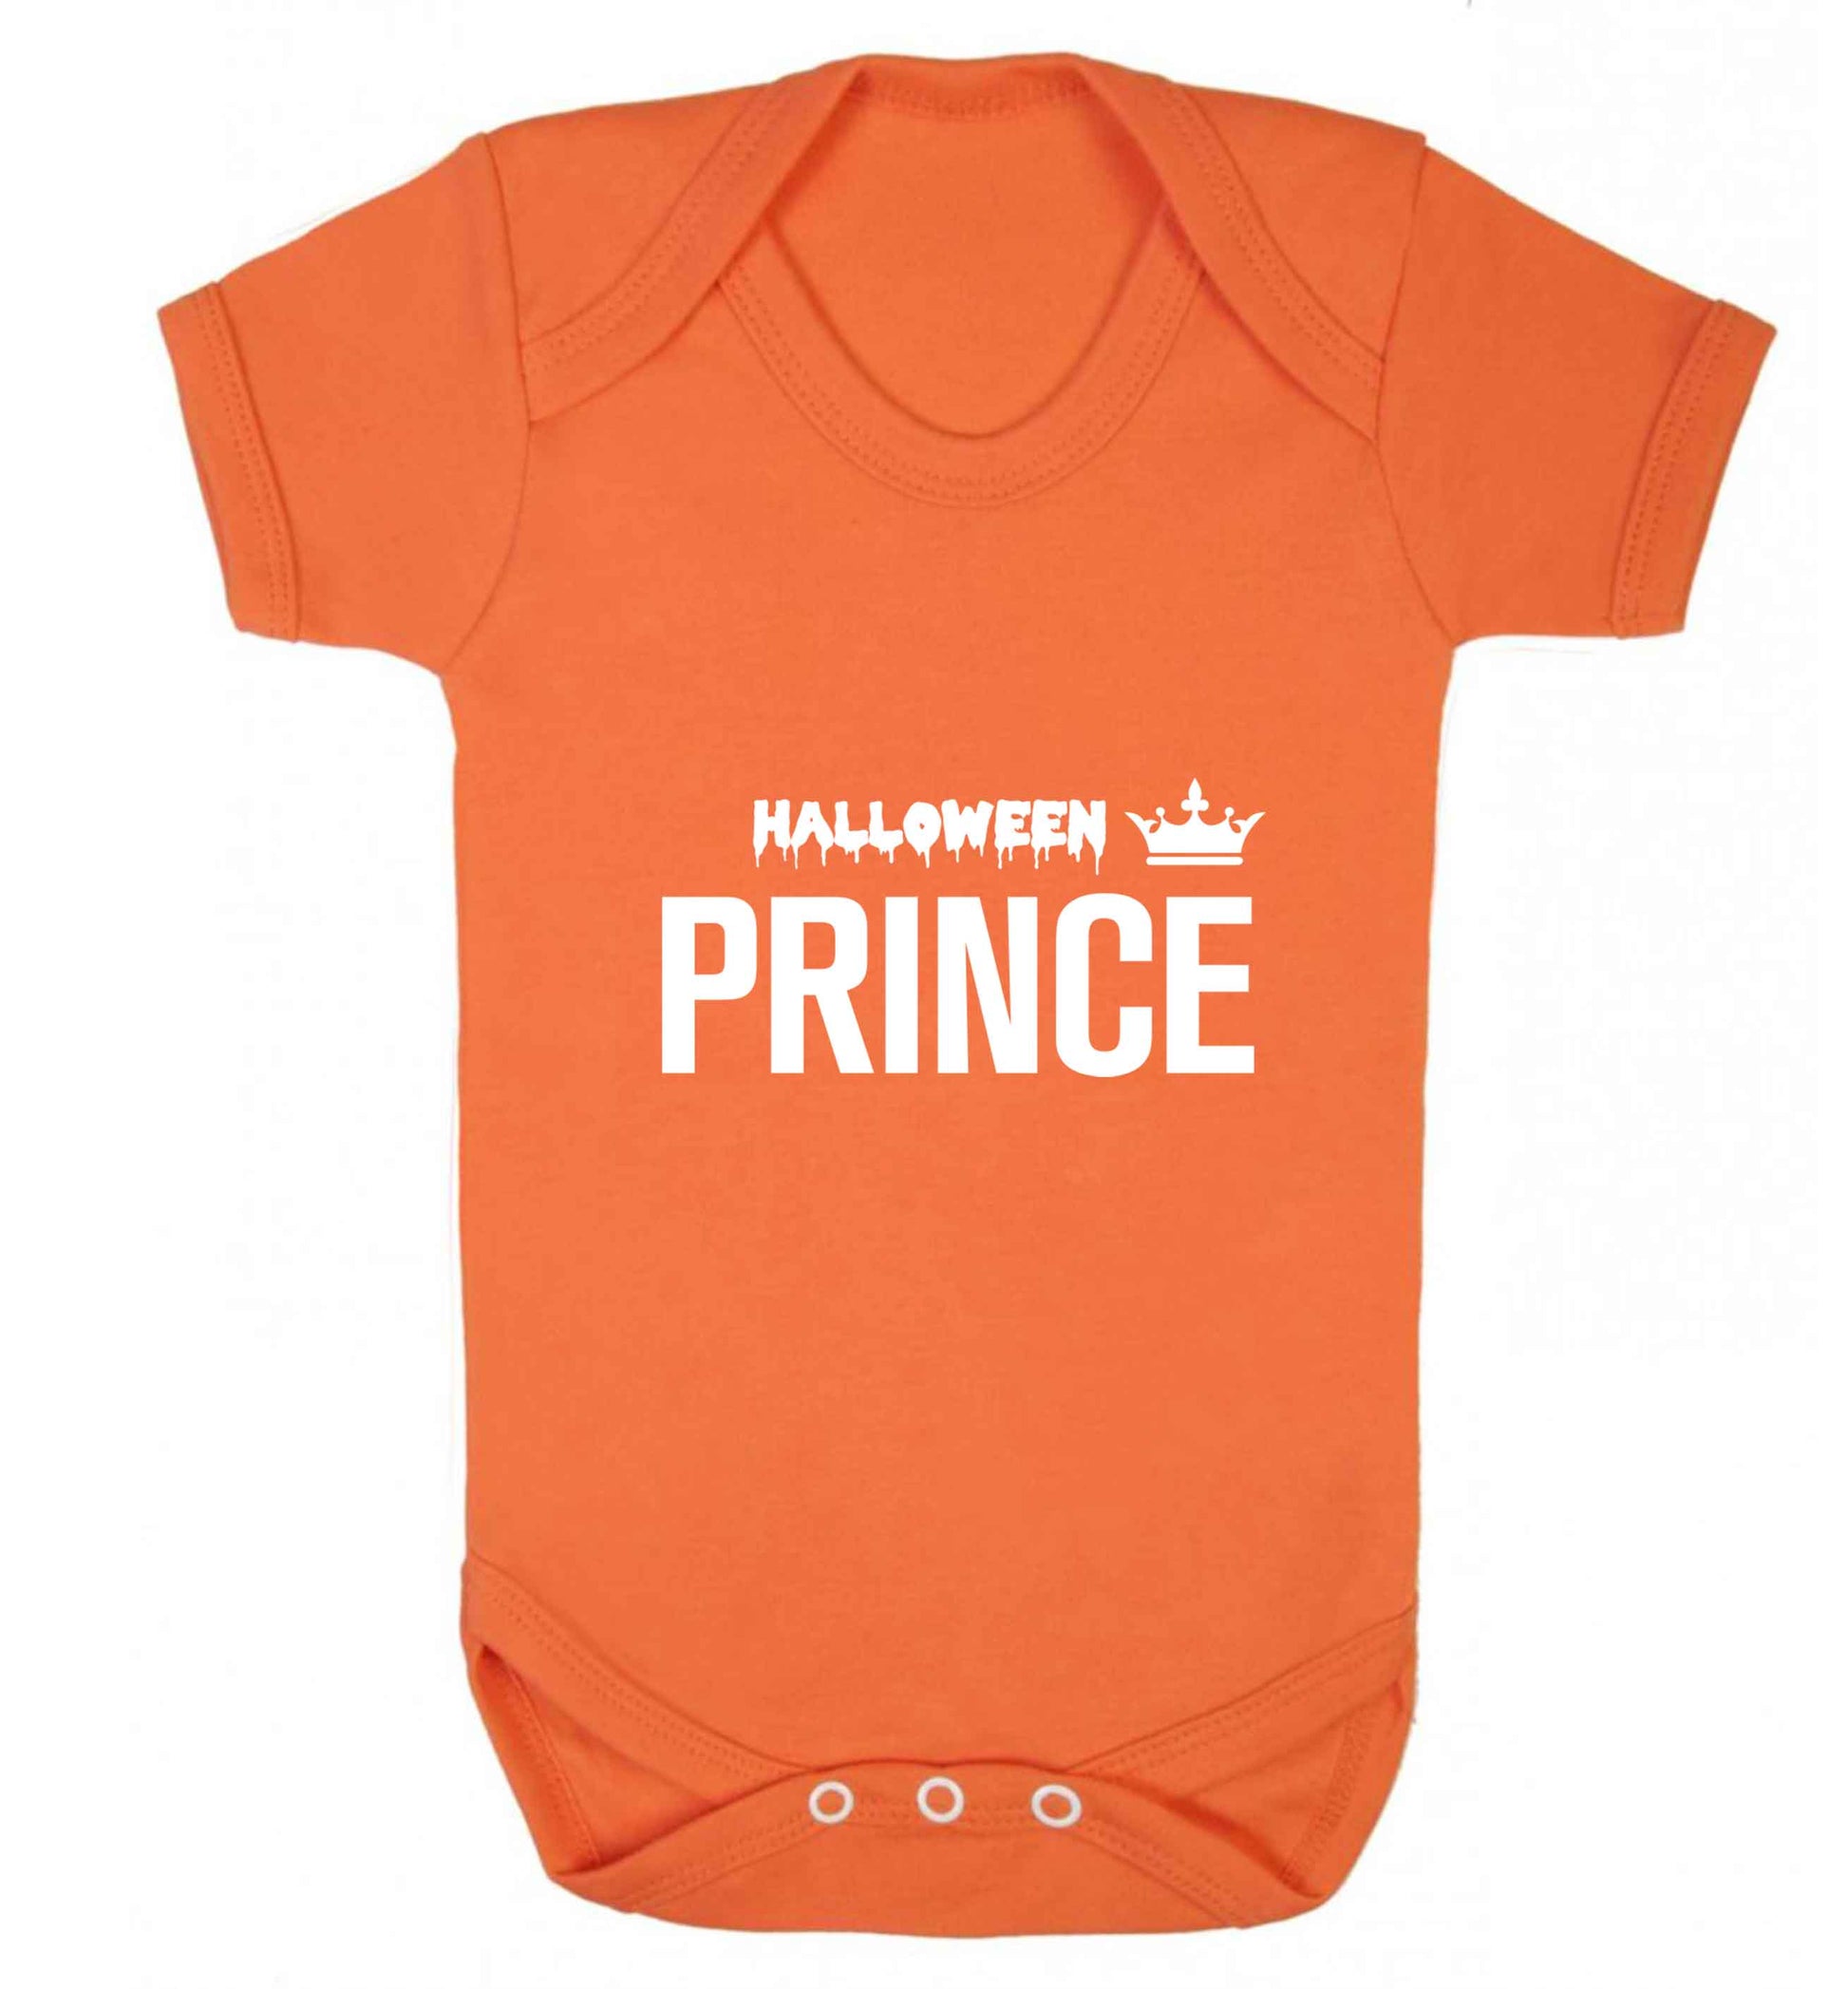 Halloween prince baby vest orange 18-24 months